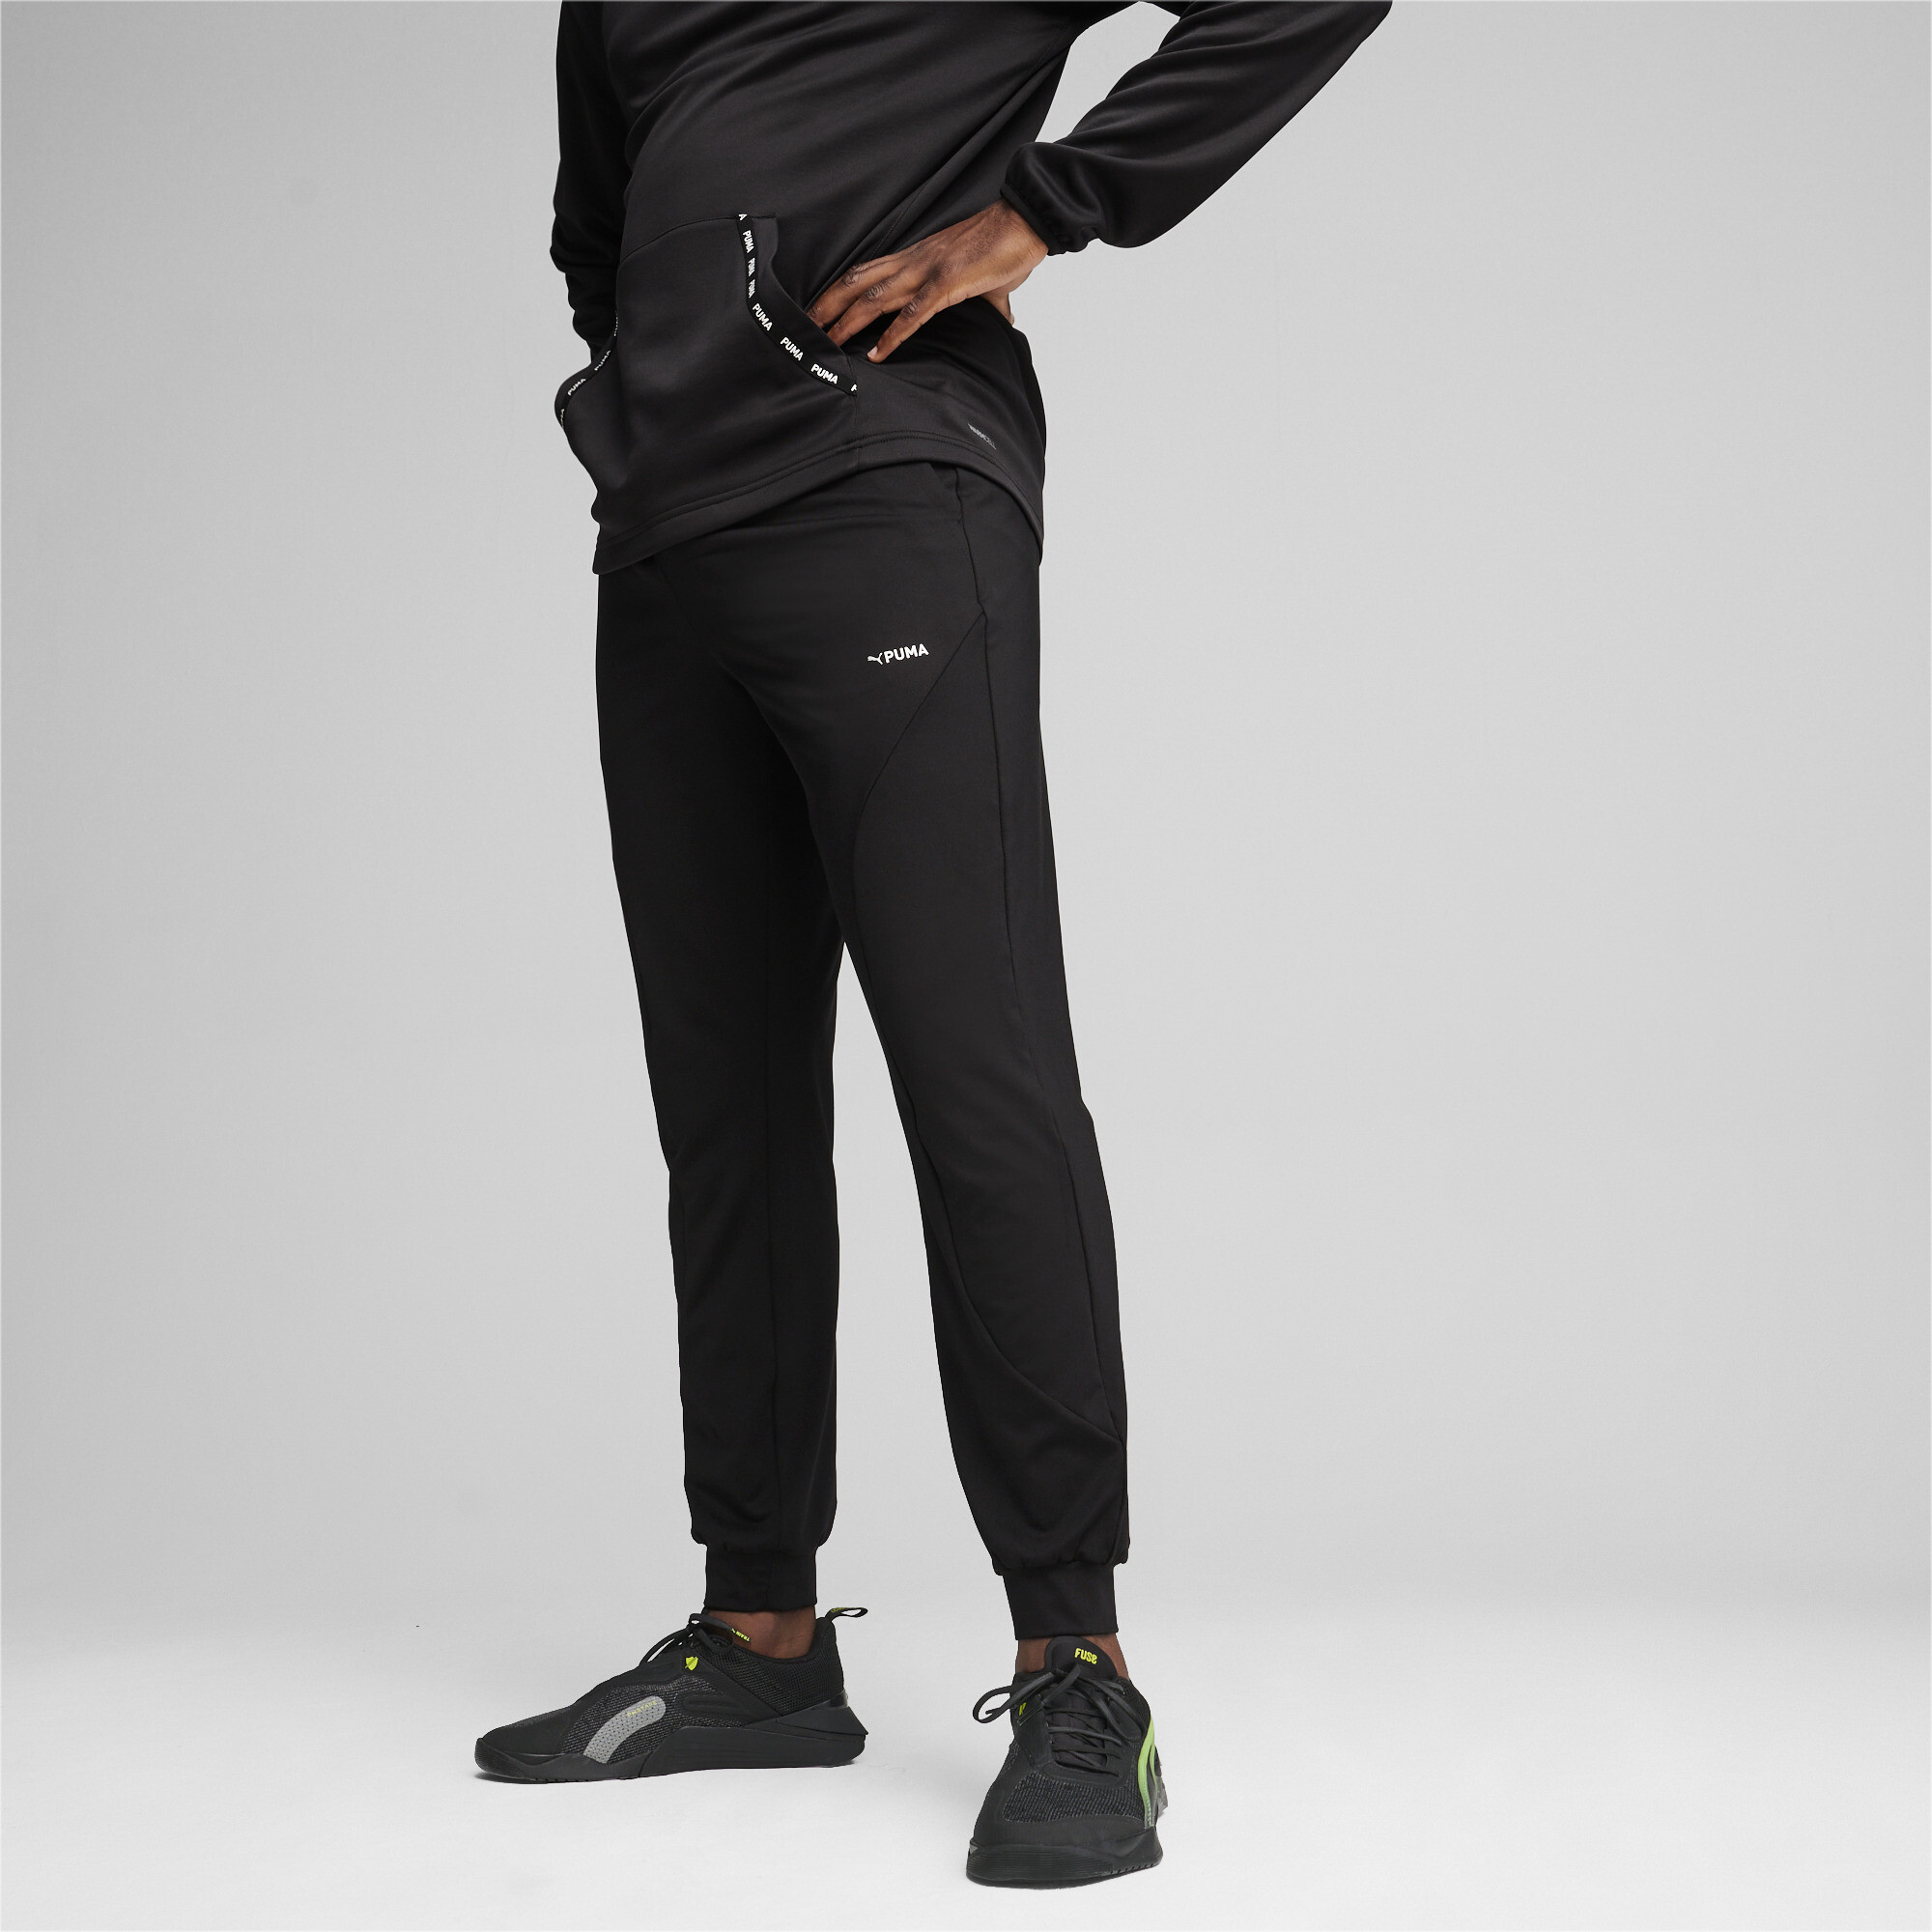 Men's Puma FIT Polyspan's Jogger, Black, Size M, Sport